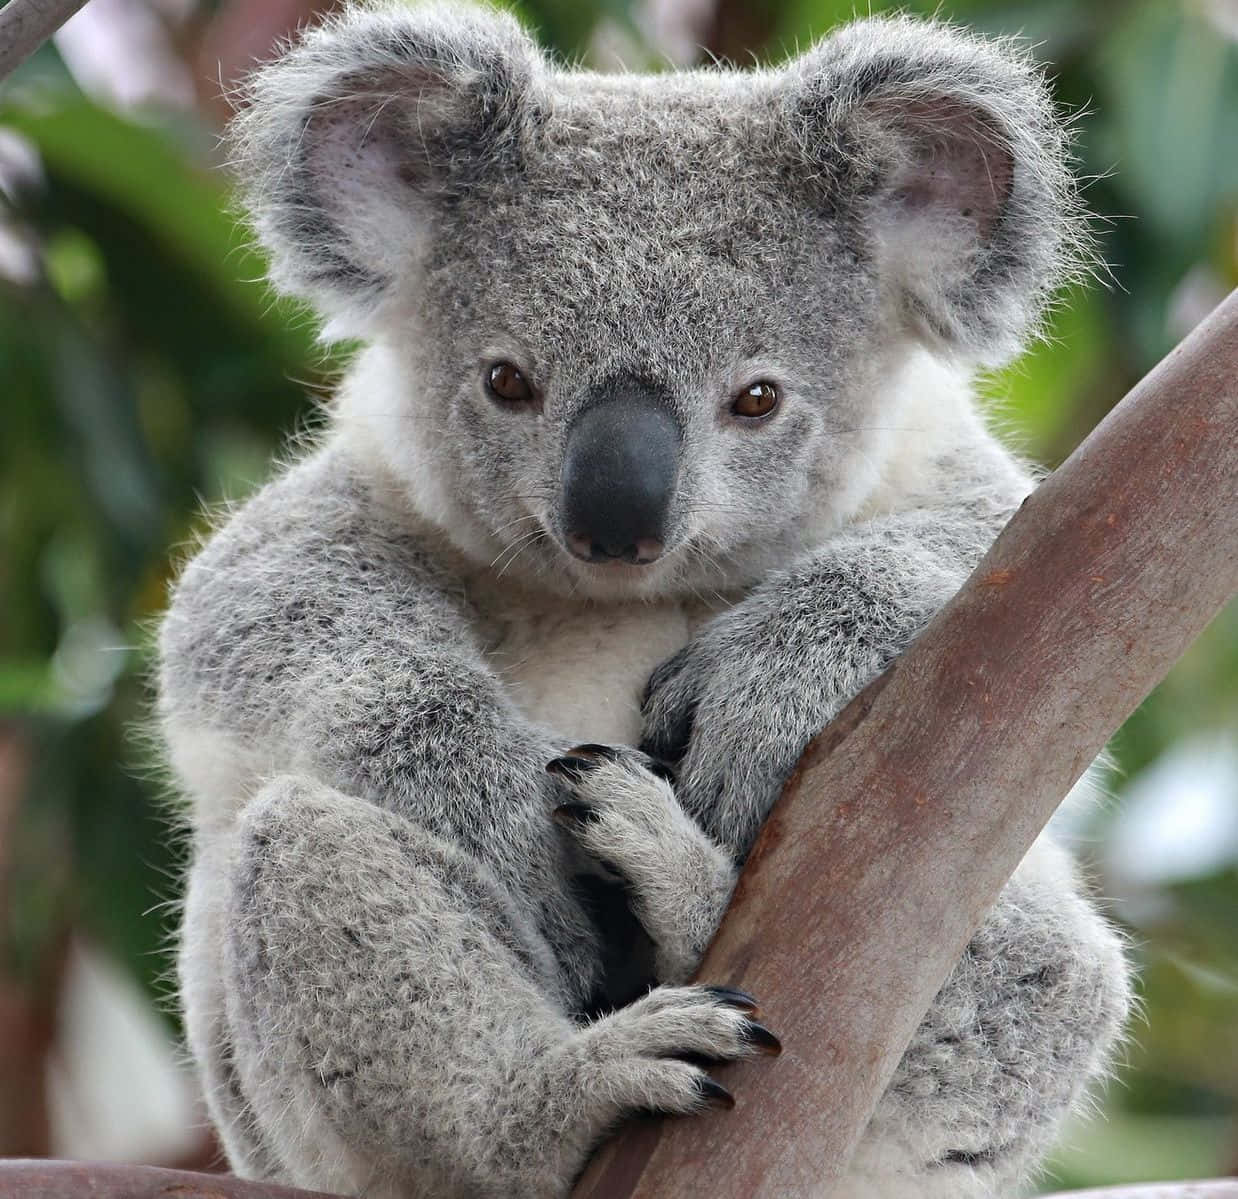 "Cuddle up with a Koala Bear!"